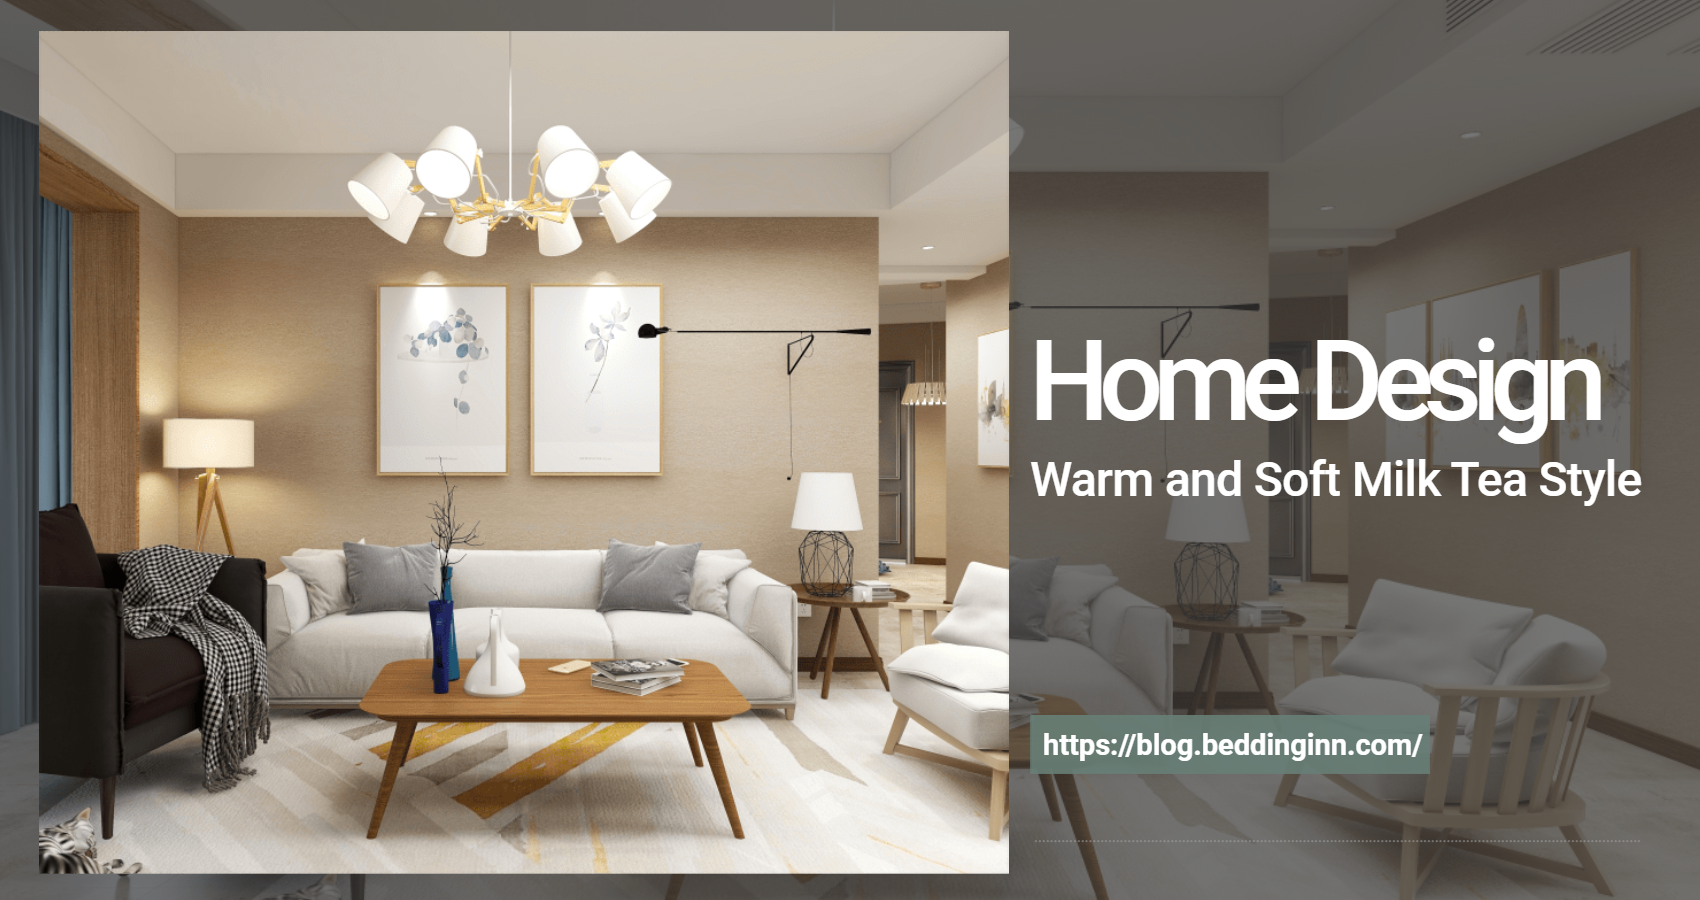 Home Design | Warm and Soft Milk Tea Style